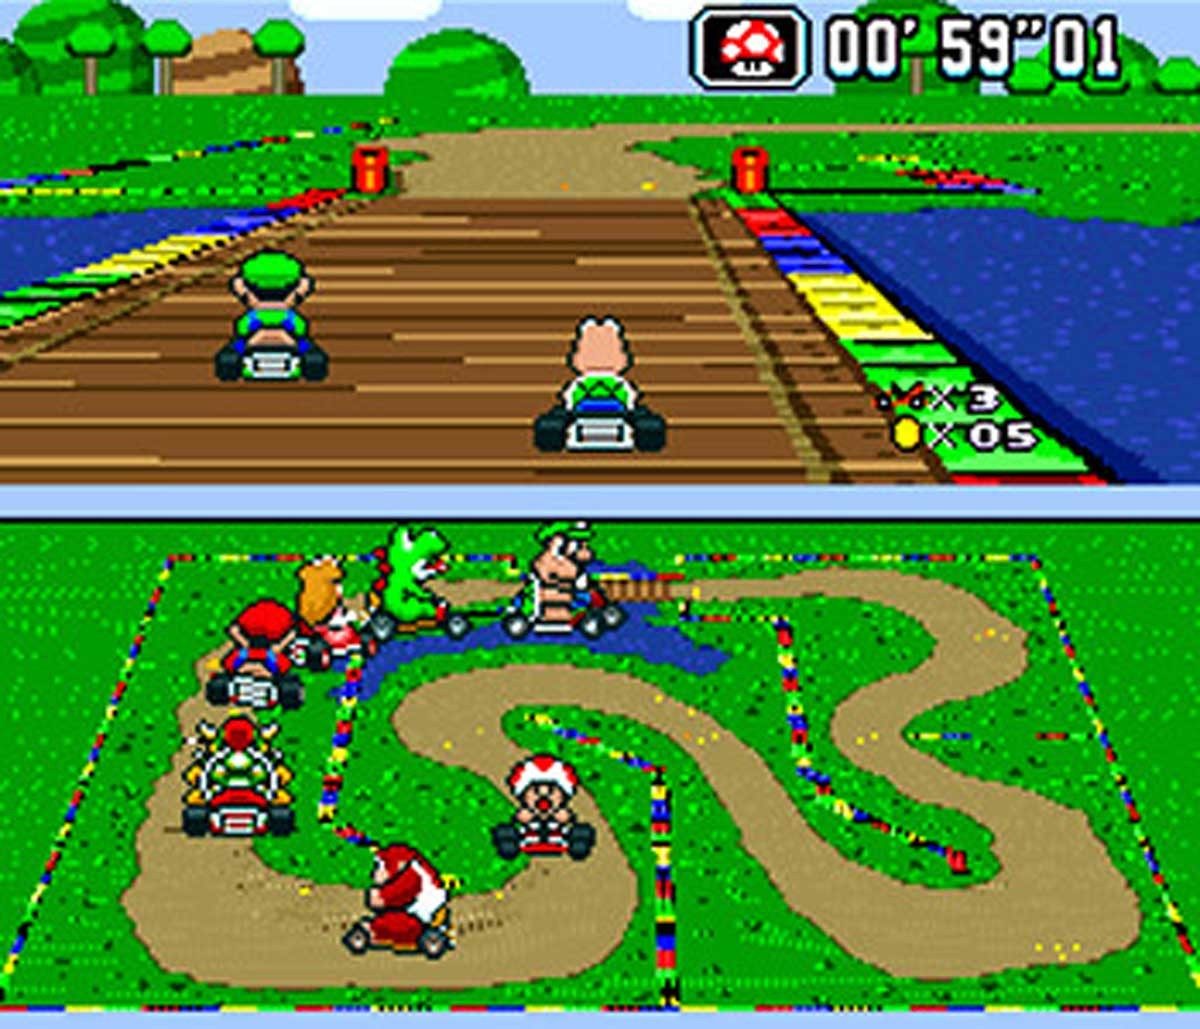 Игра nintendo game. Super Mario Kart Snes. Mario Kart Nintendo. Супер Марио игра Нинтендо. Супер Марио 1 игра на Нинтендо.